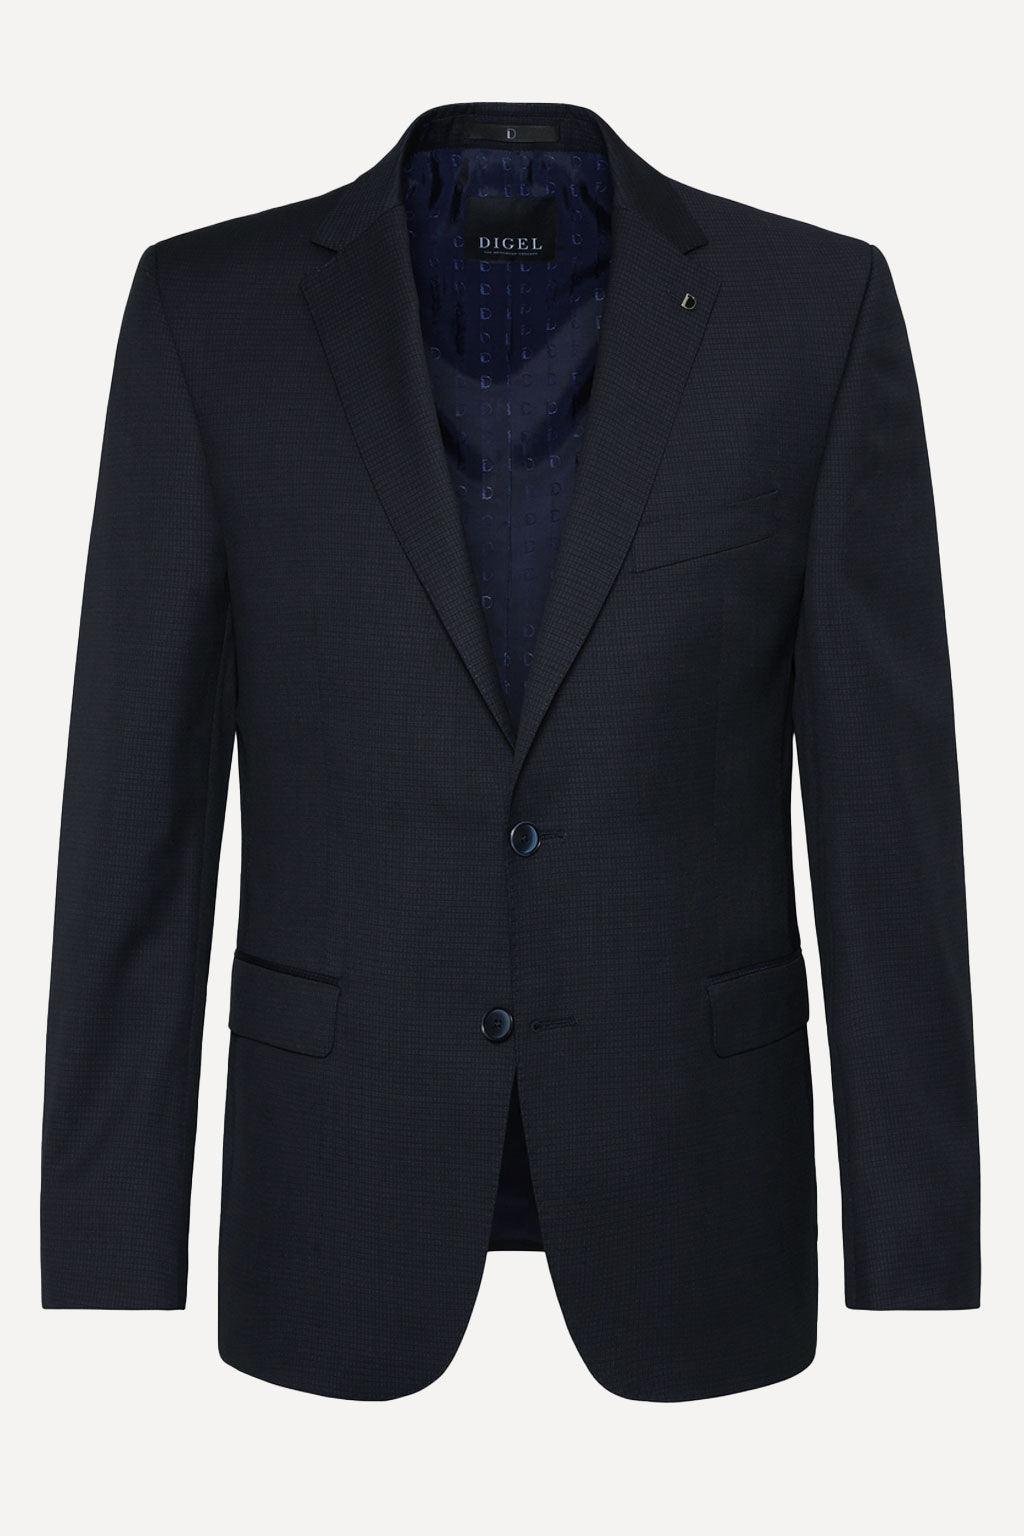 Digel Preference colbert blauw | Big Boss | the menswear concept